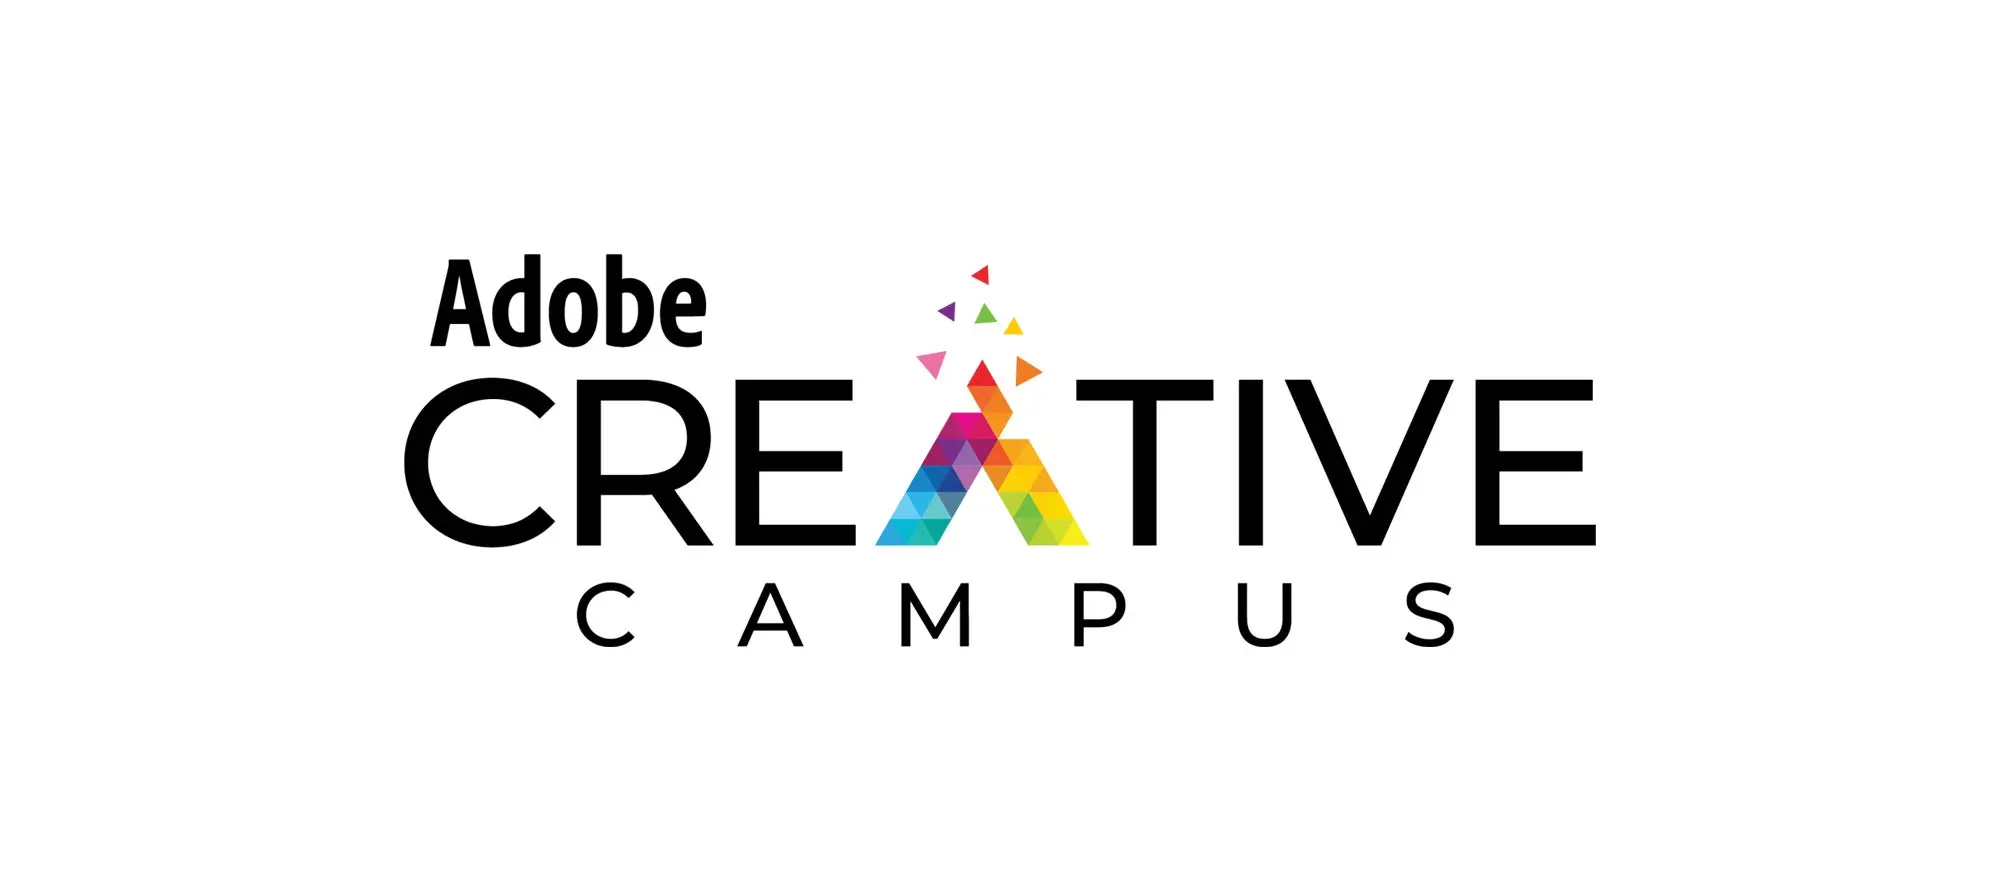 Graphic reading "Adobe Creative Campus.